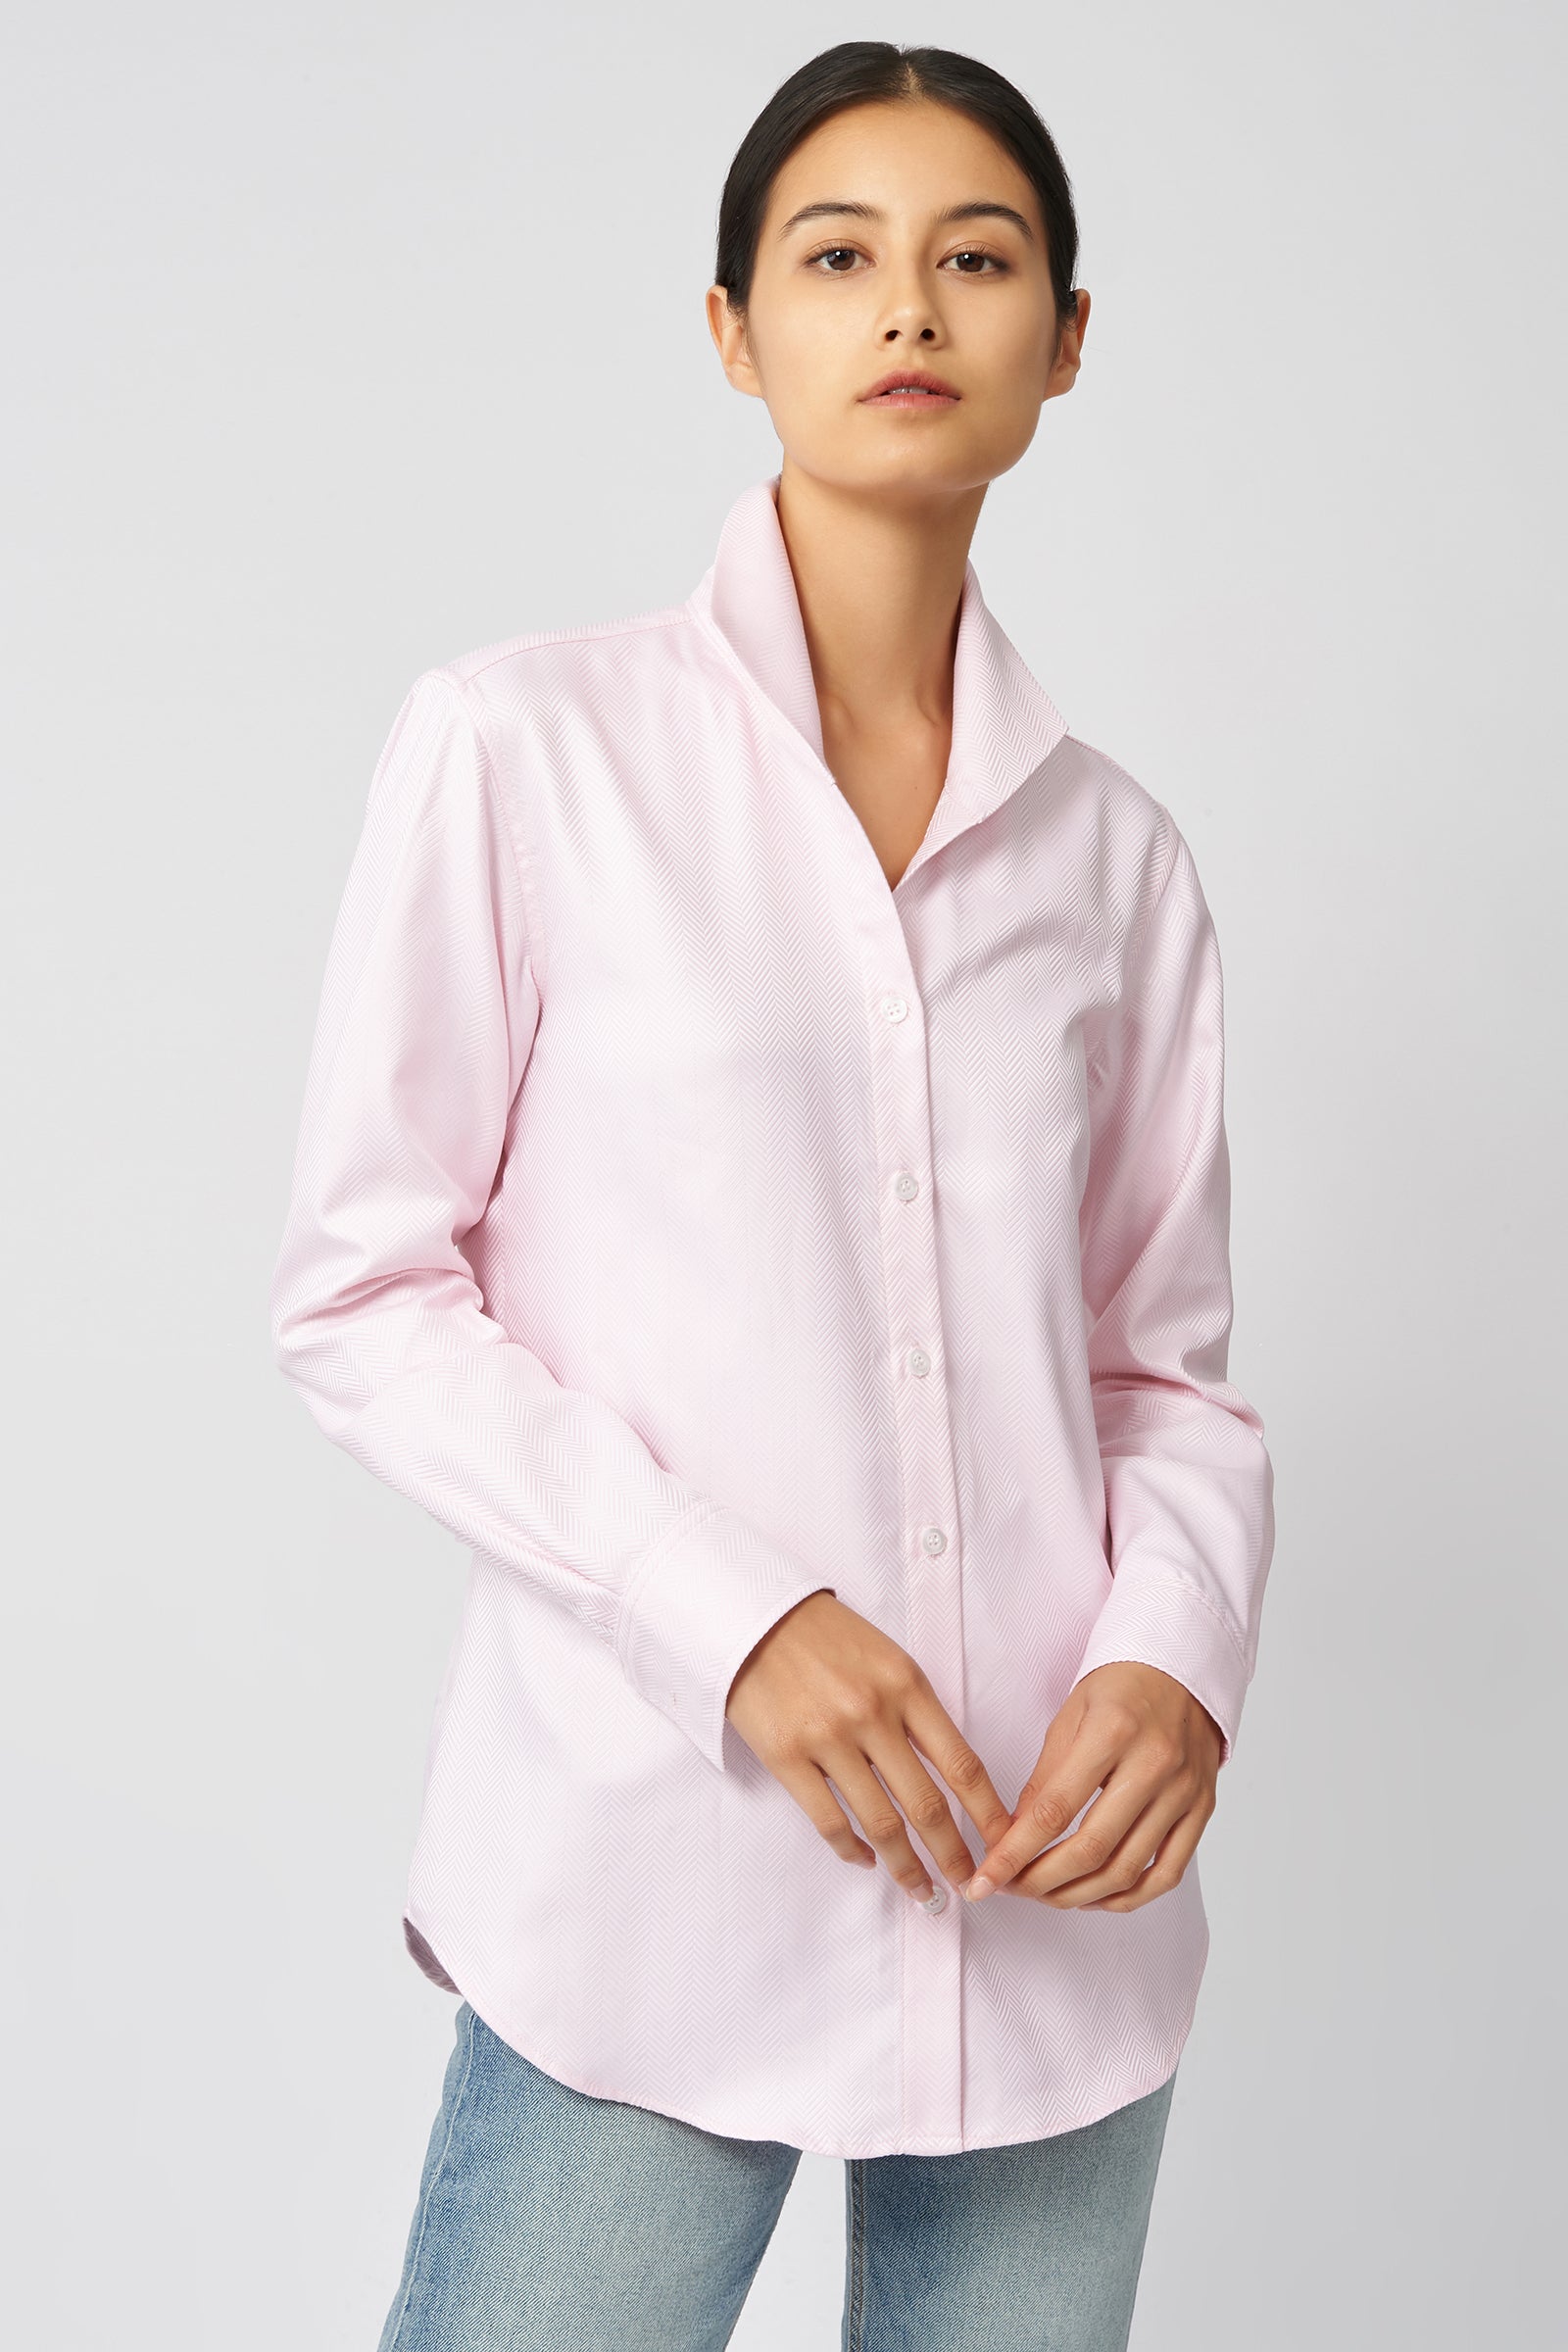 Kal Rieman Ginna Tailored Shirt in Pink Herringbone on Model Front View